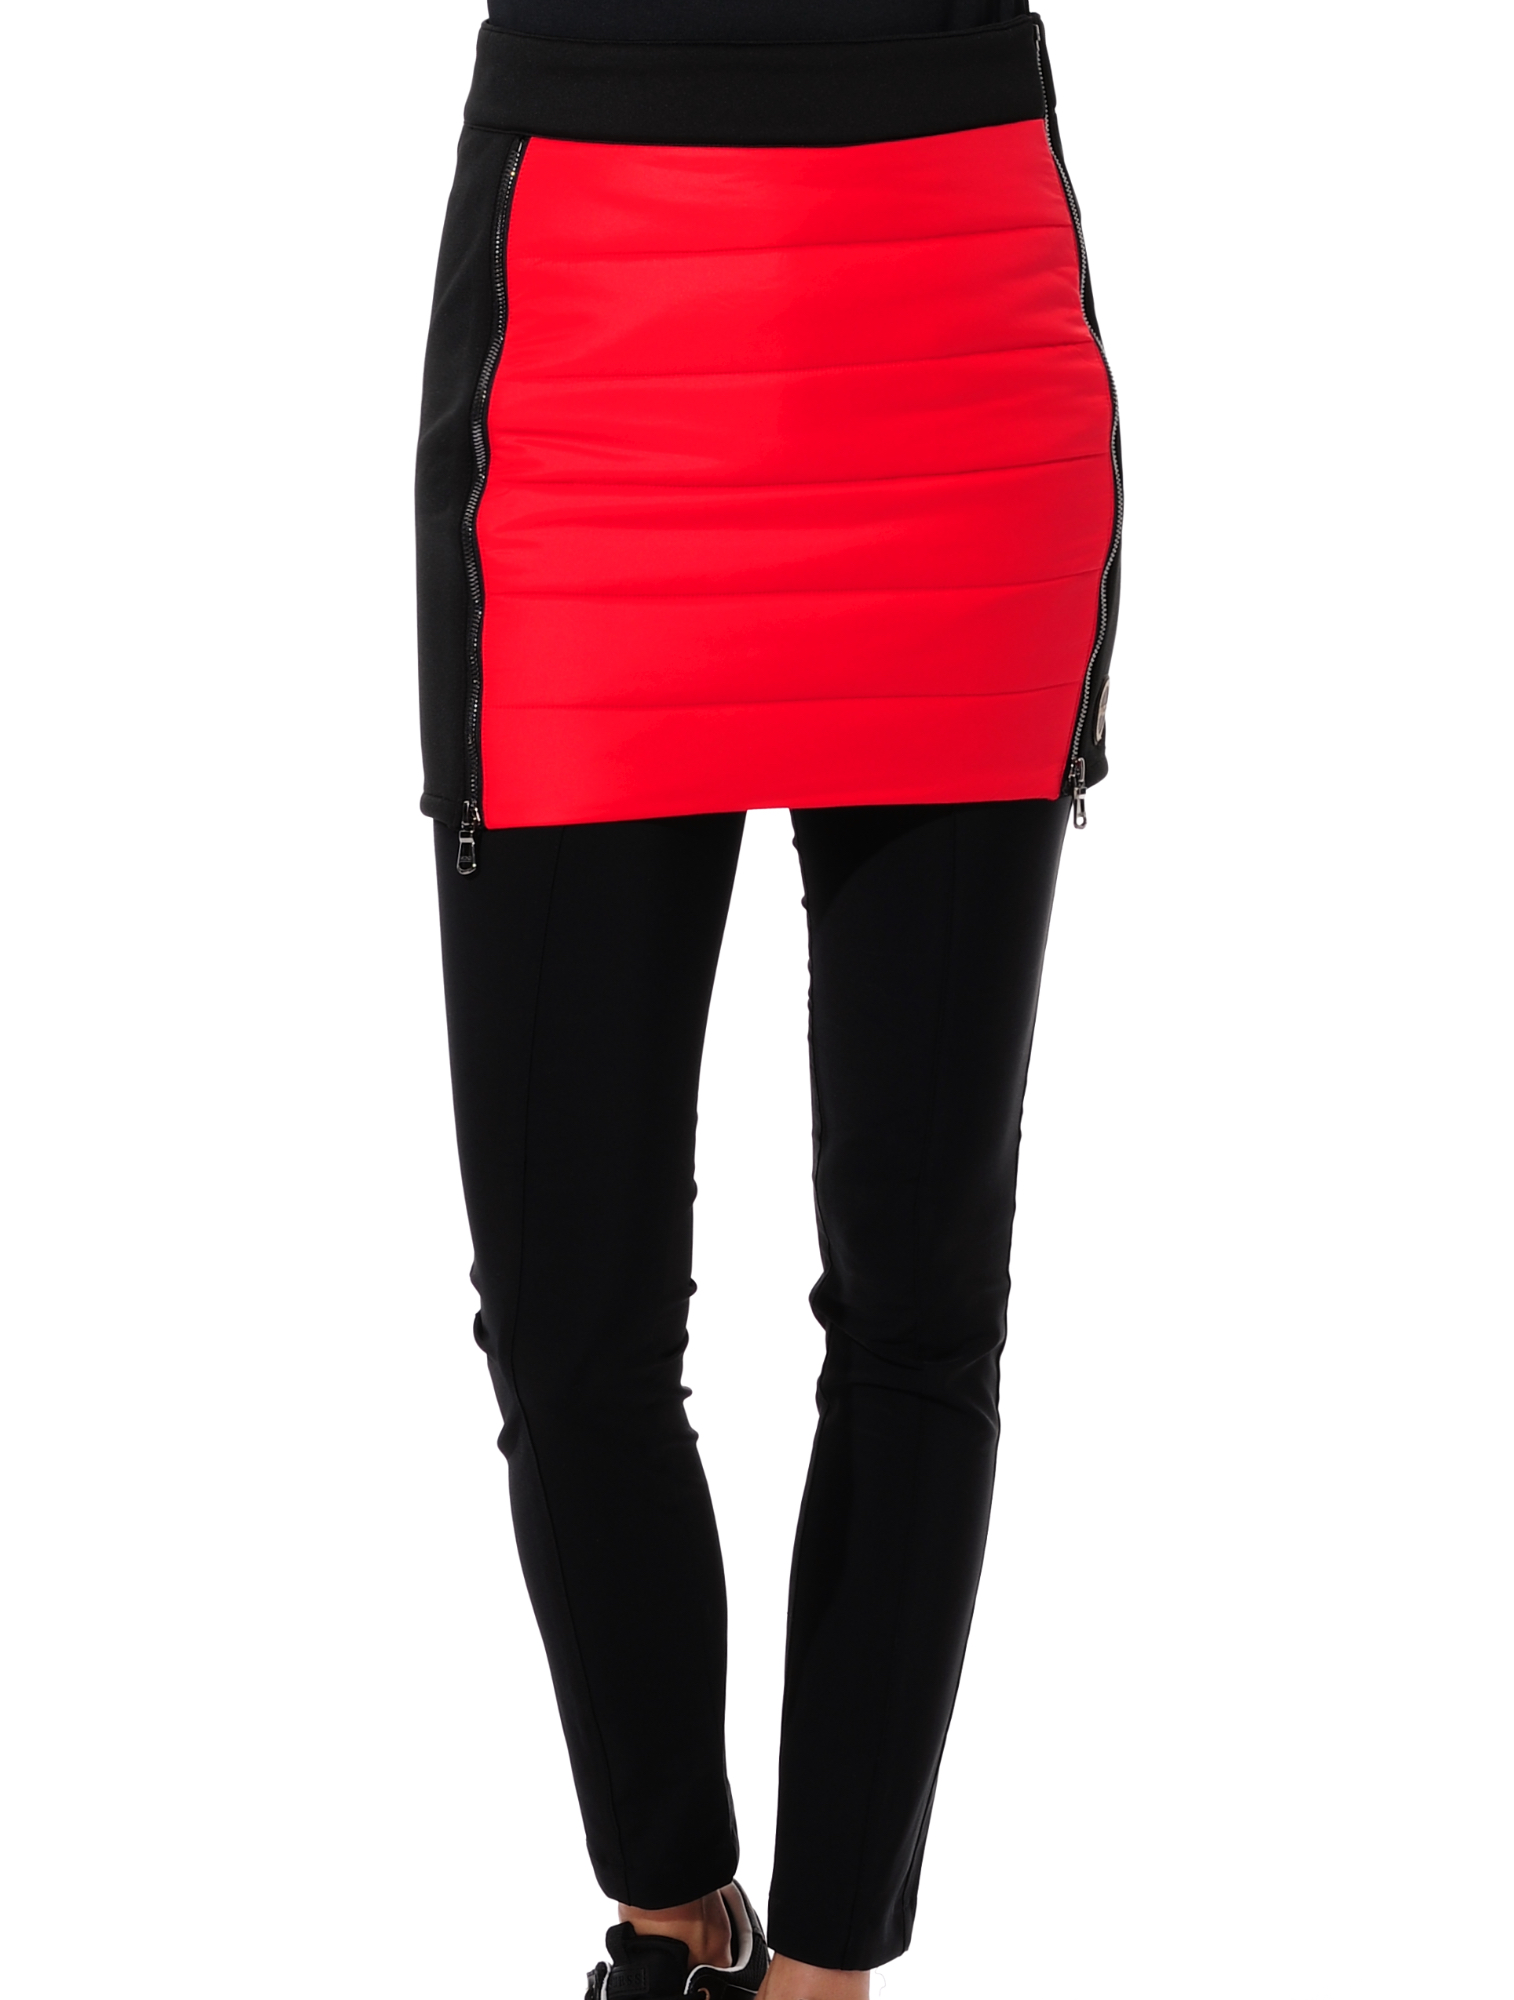 power stretch skirt red/black 